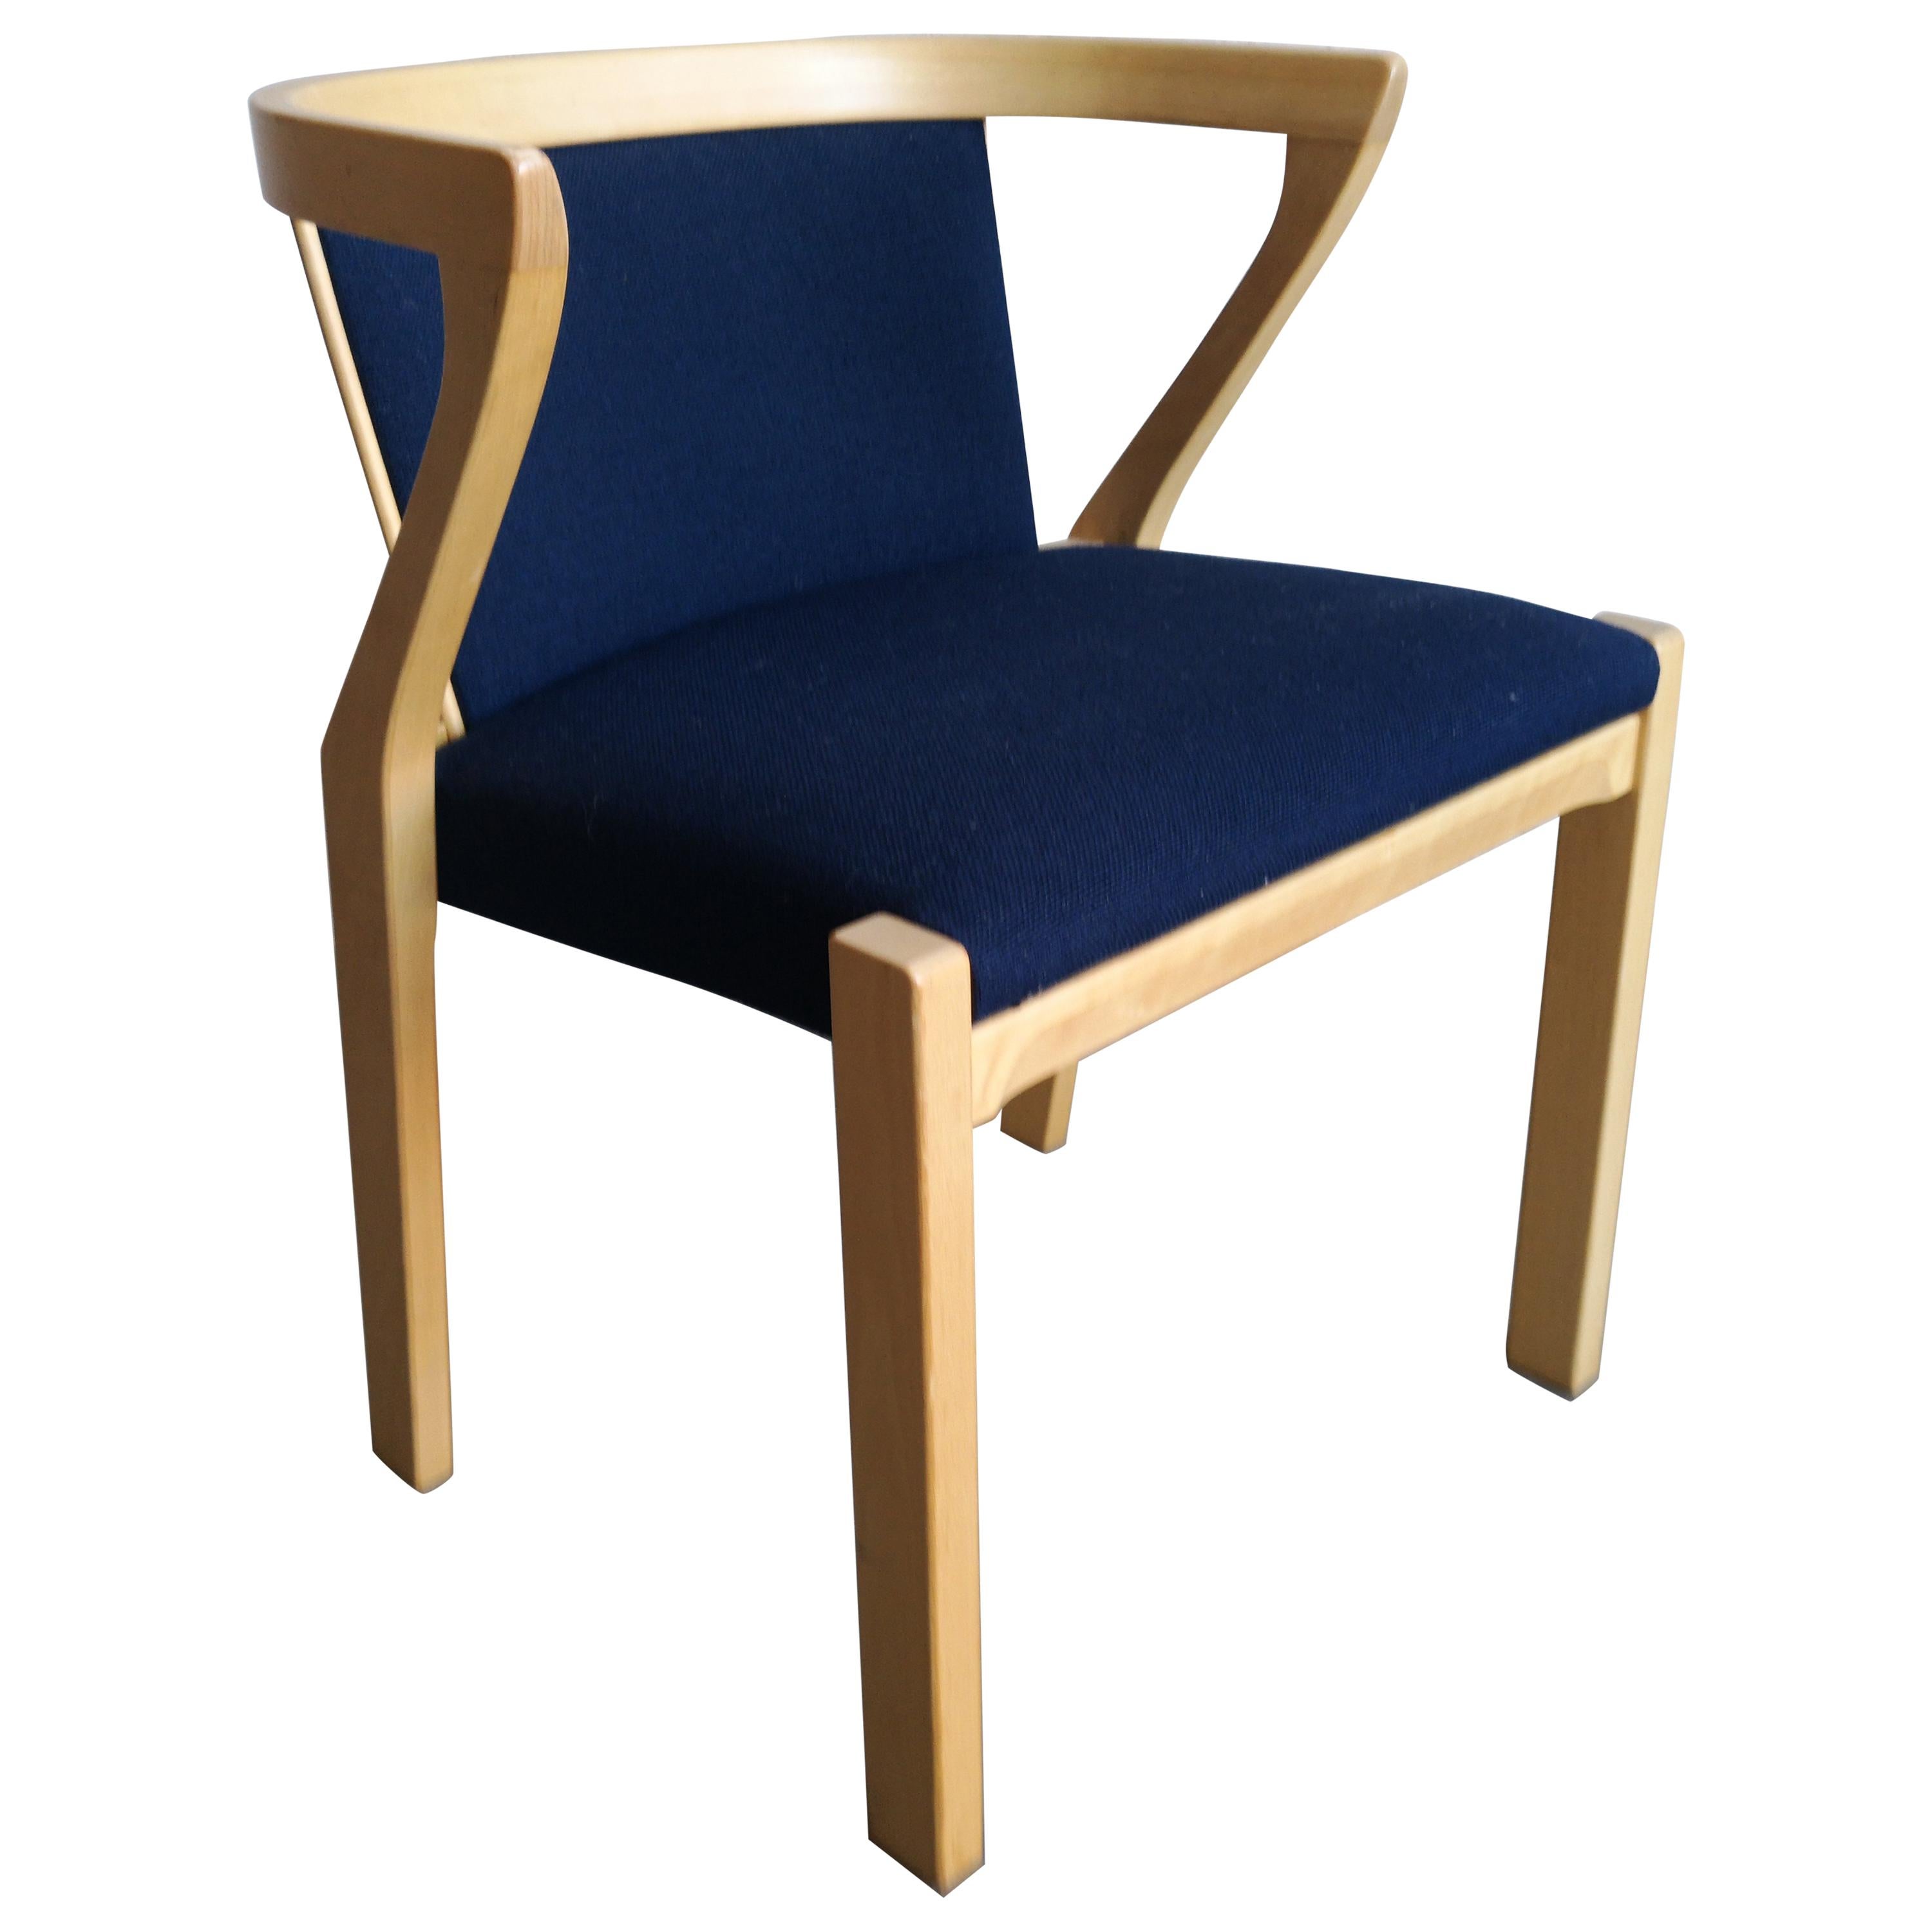 Artek Chair No. 2 "Kakkonen", Designed by Alvar Aalto  For Sale